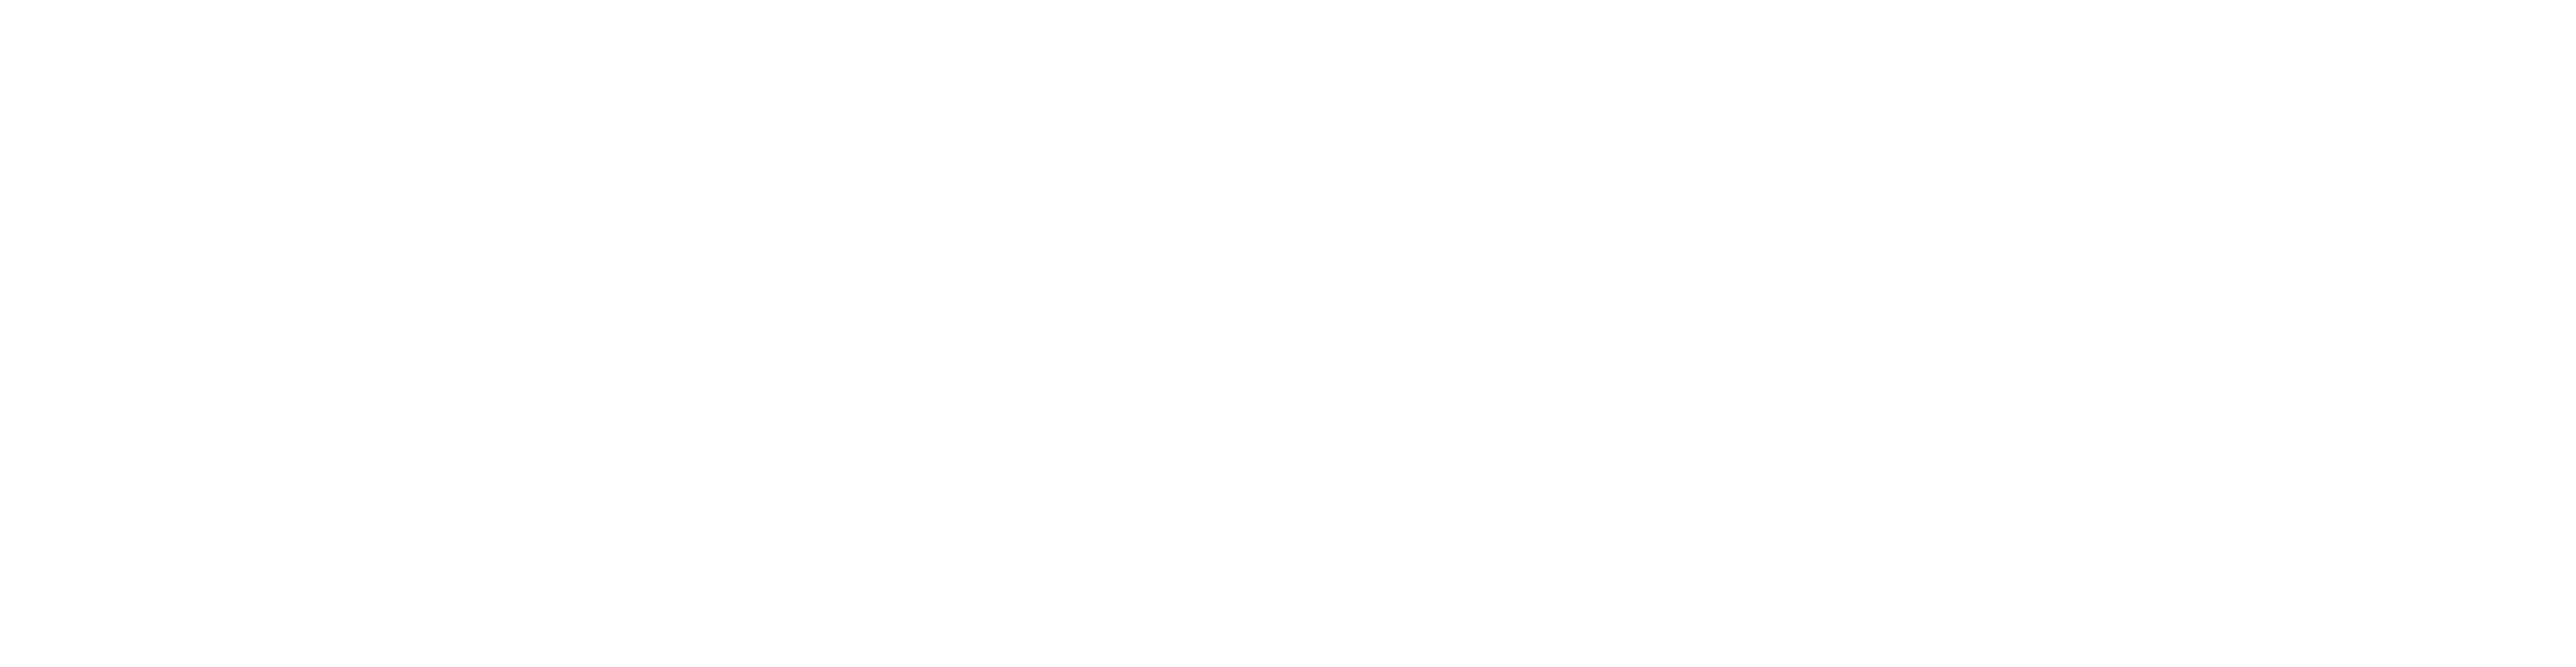 UK & International Health Coaching Association